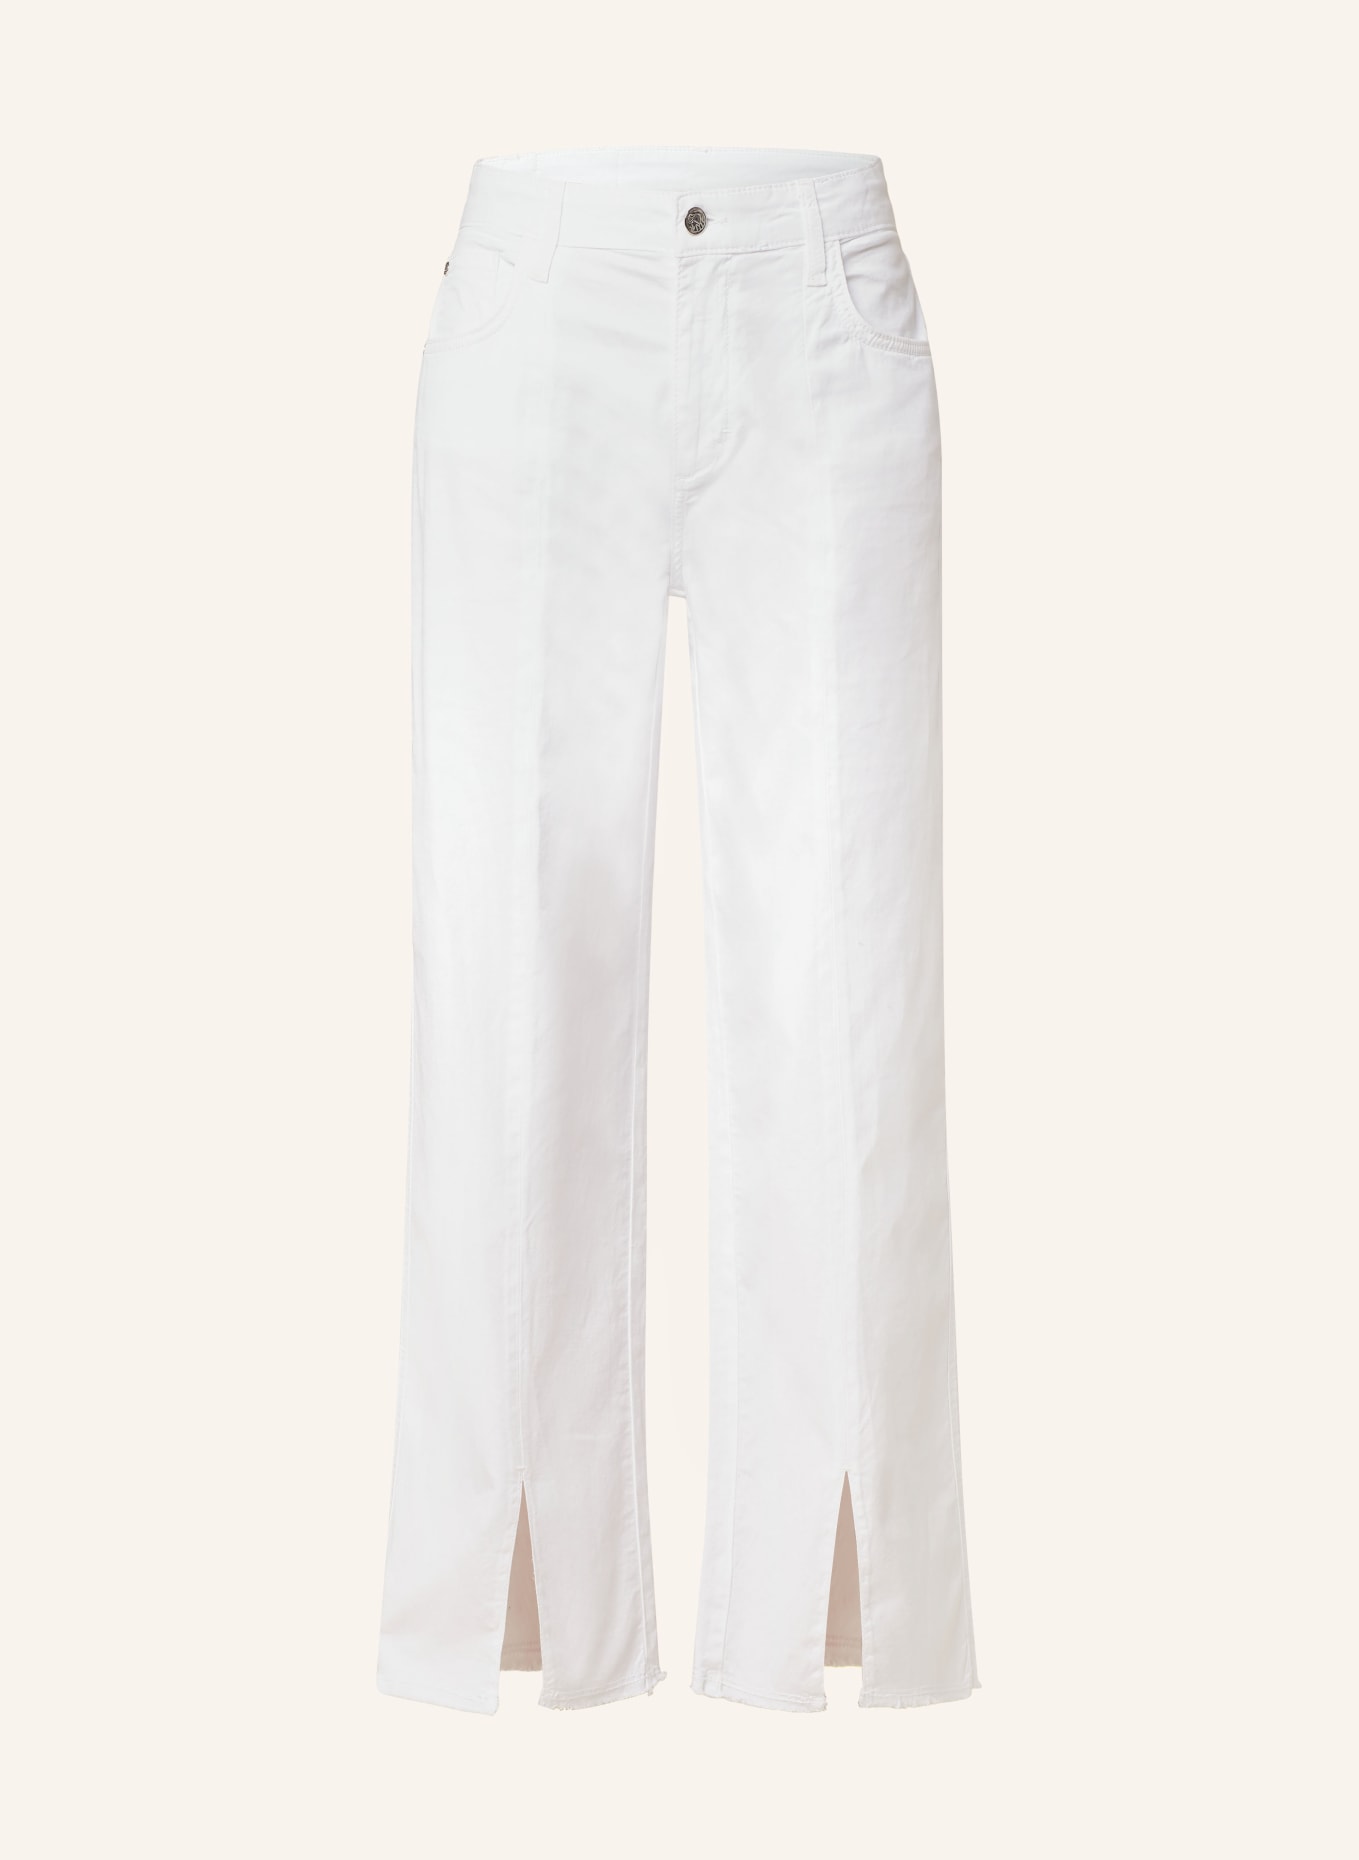 ULLI EHRLICH SPORTALM Mom Jeans, Farbe: WEISS (Bild 1)